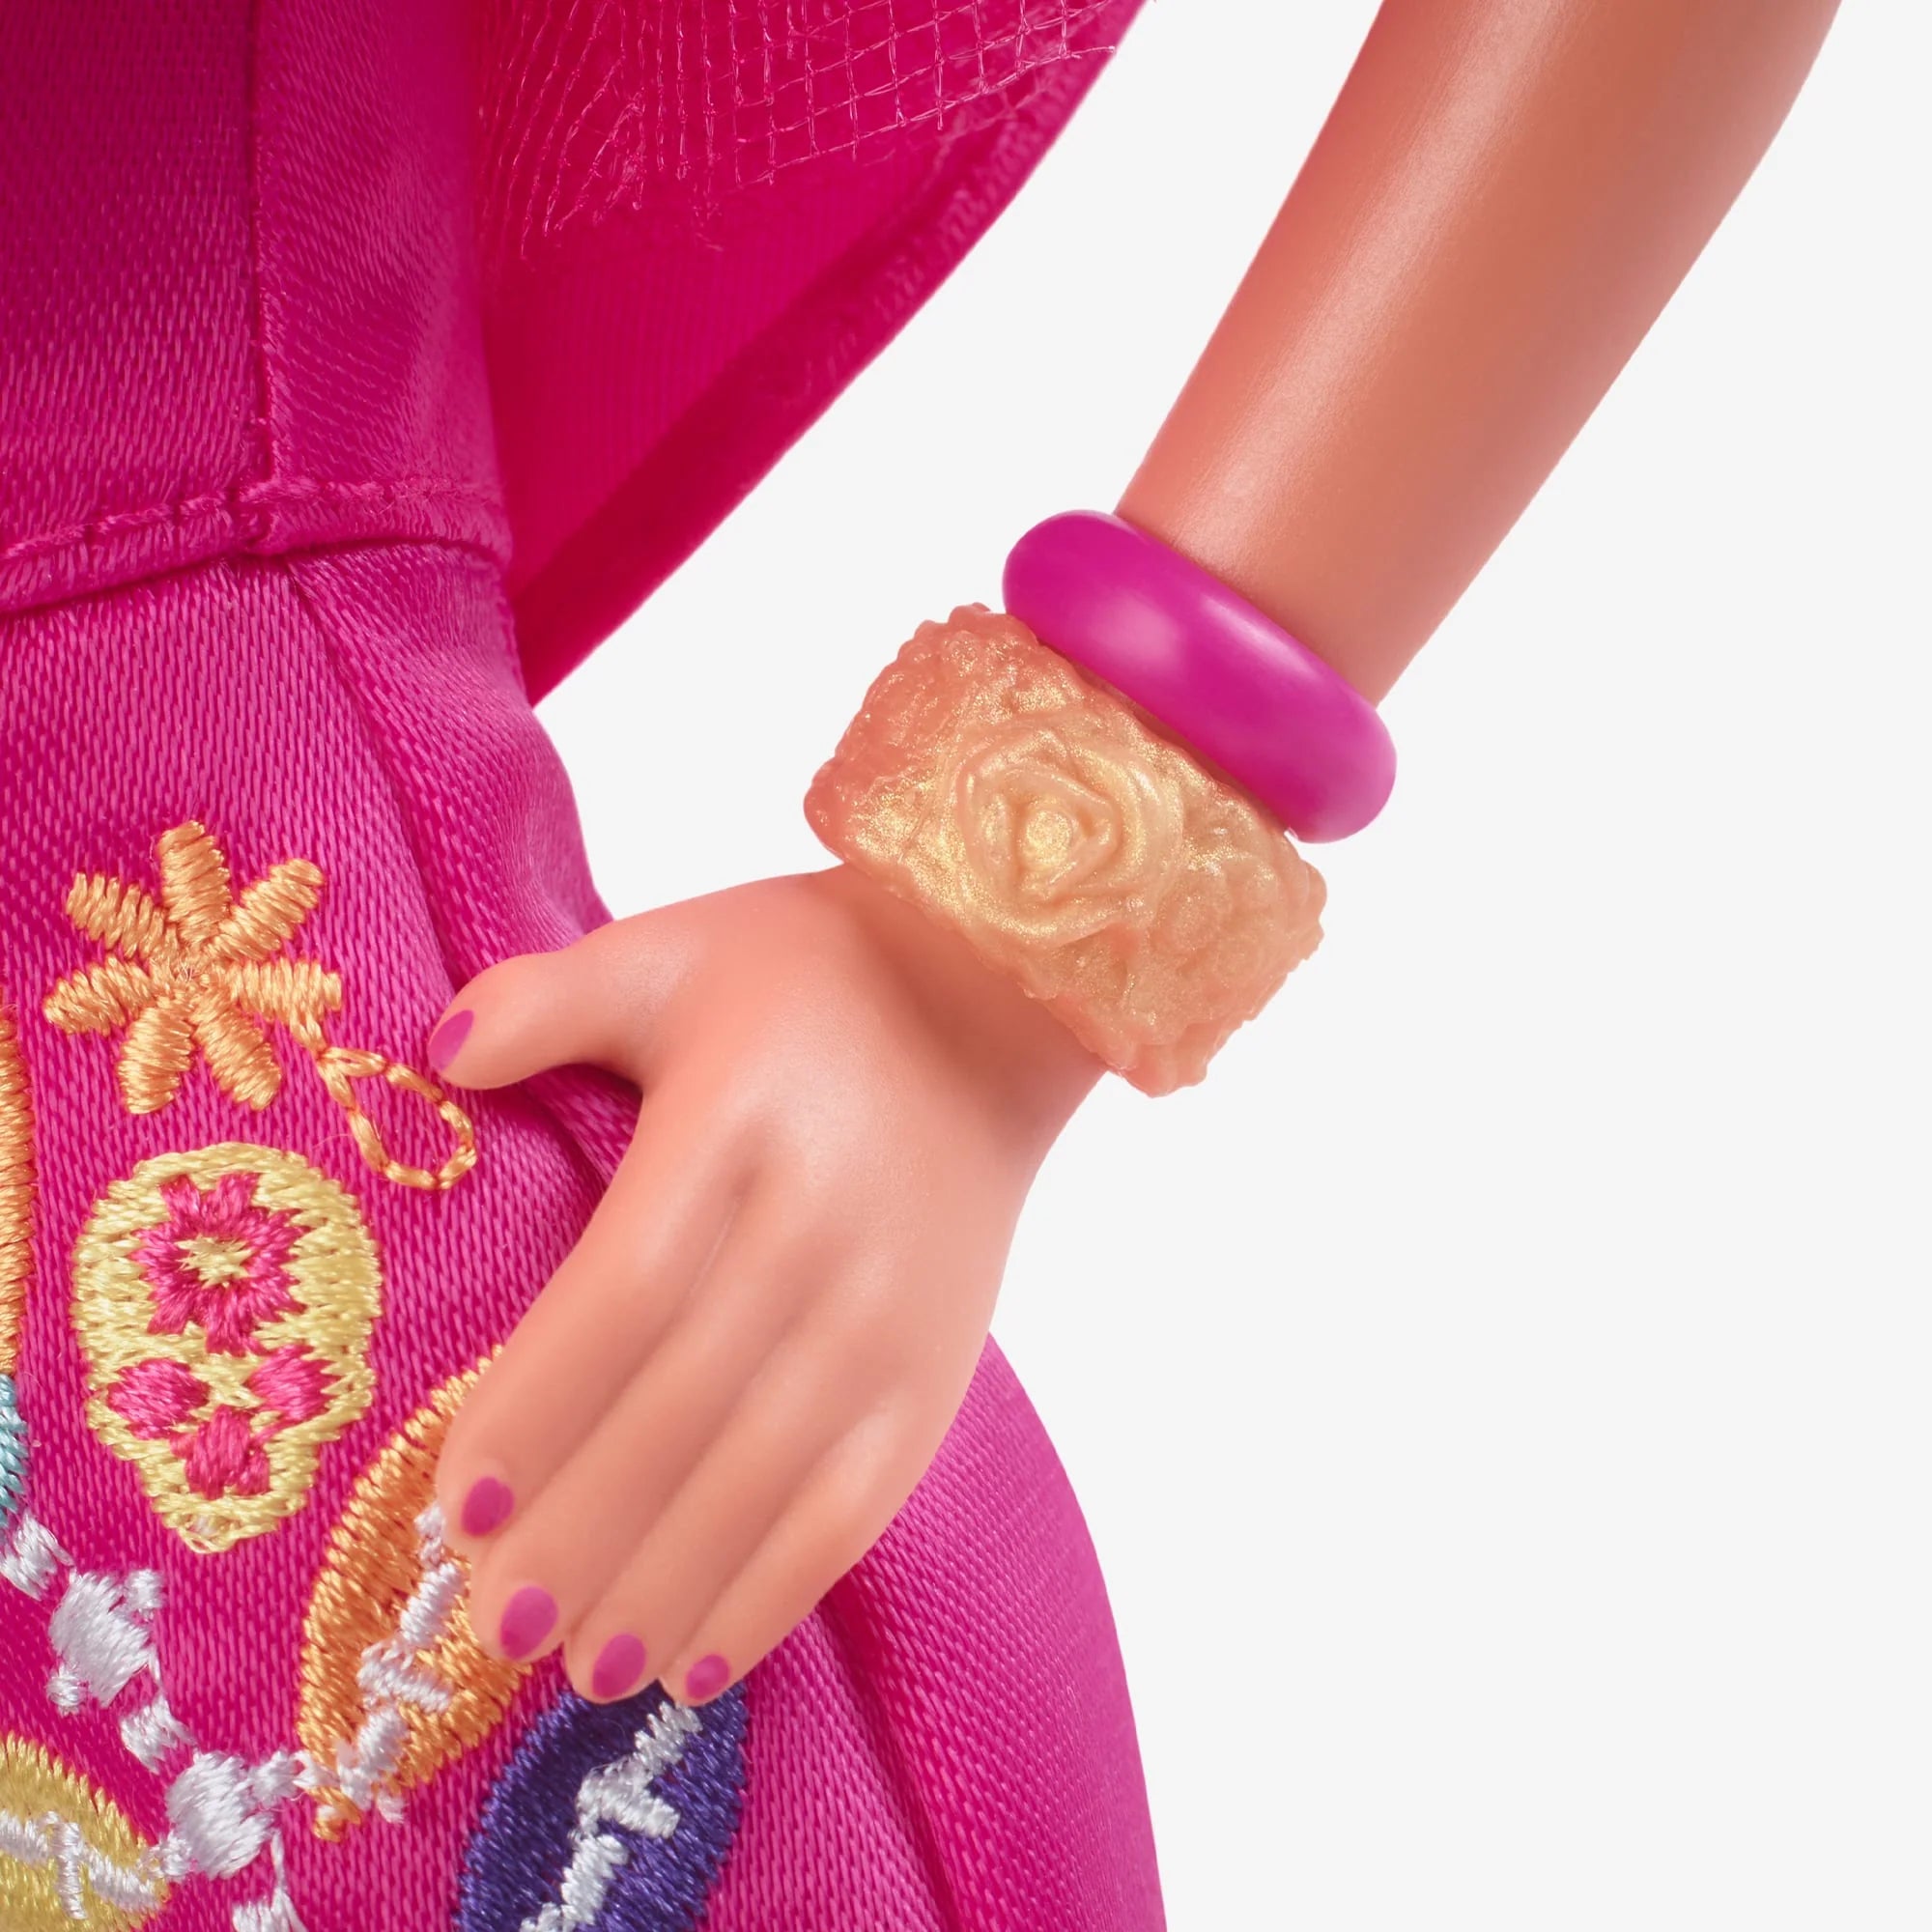 Barbie: Dia De Muertos - Barbie Edicion Limitada 2023